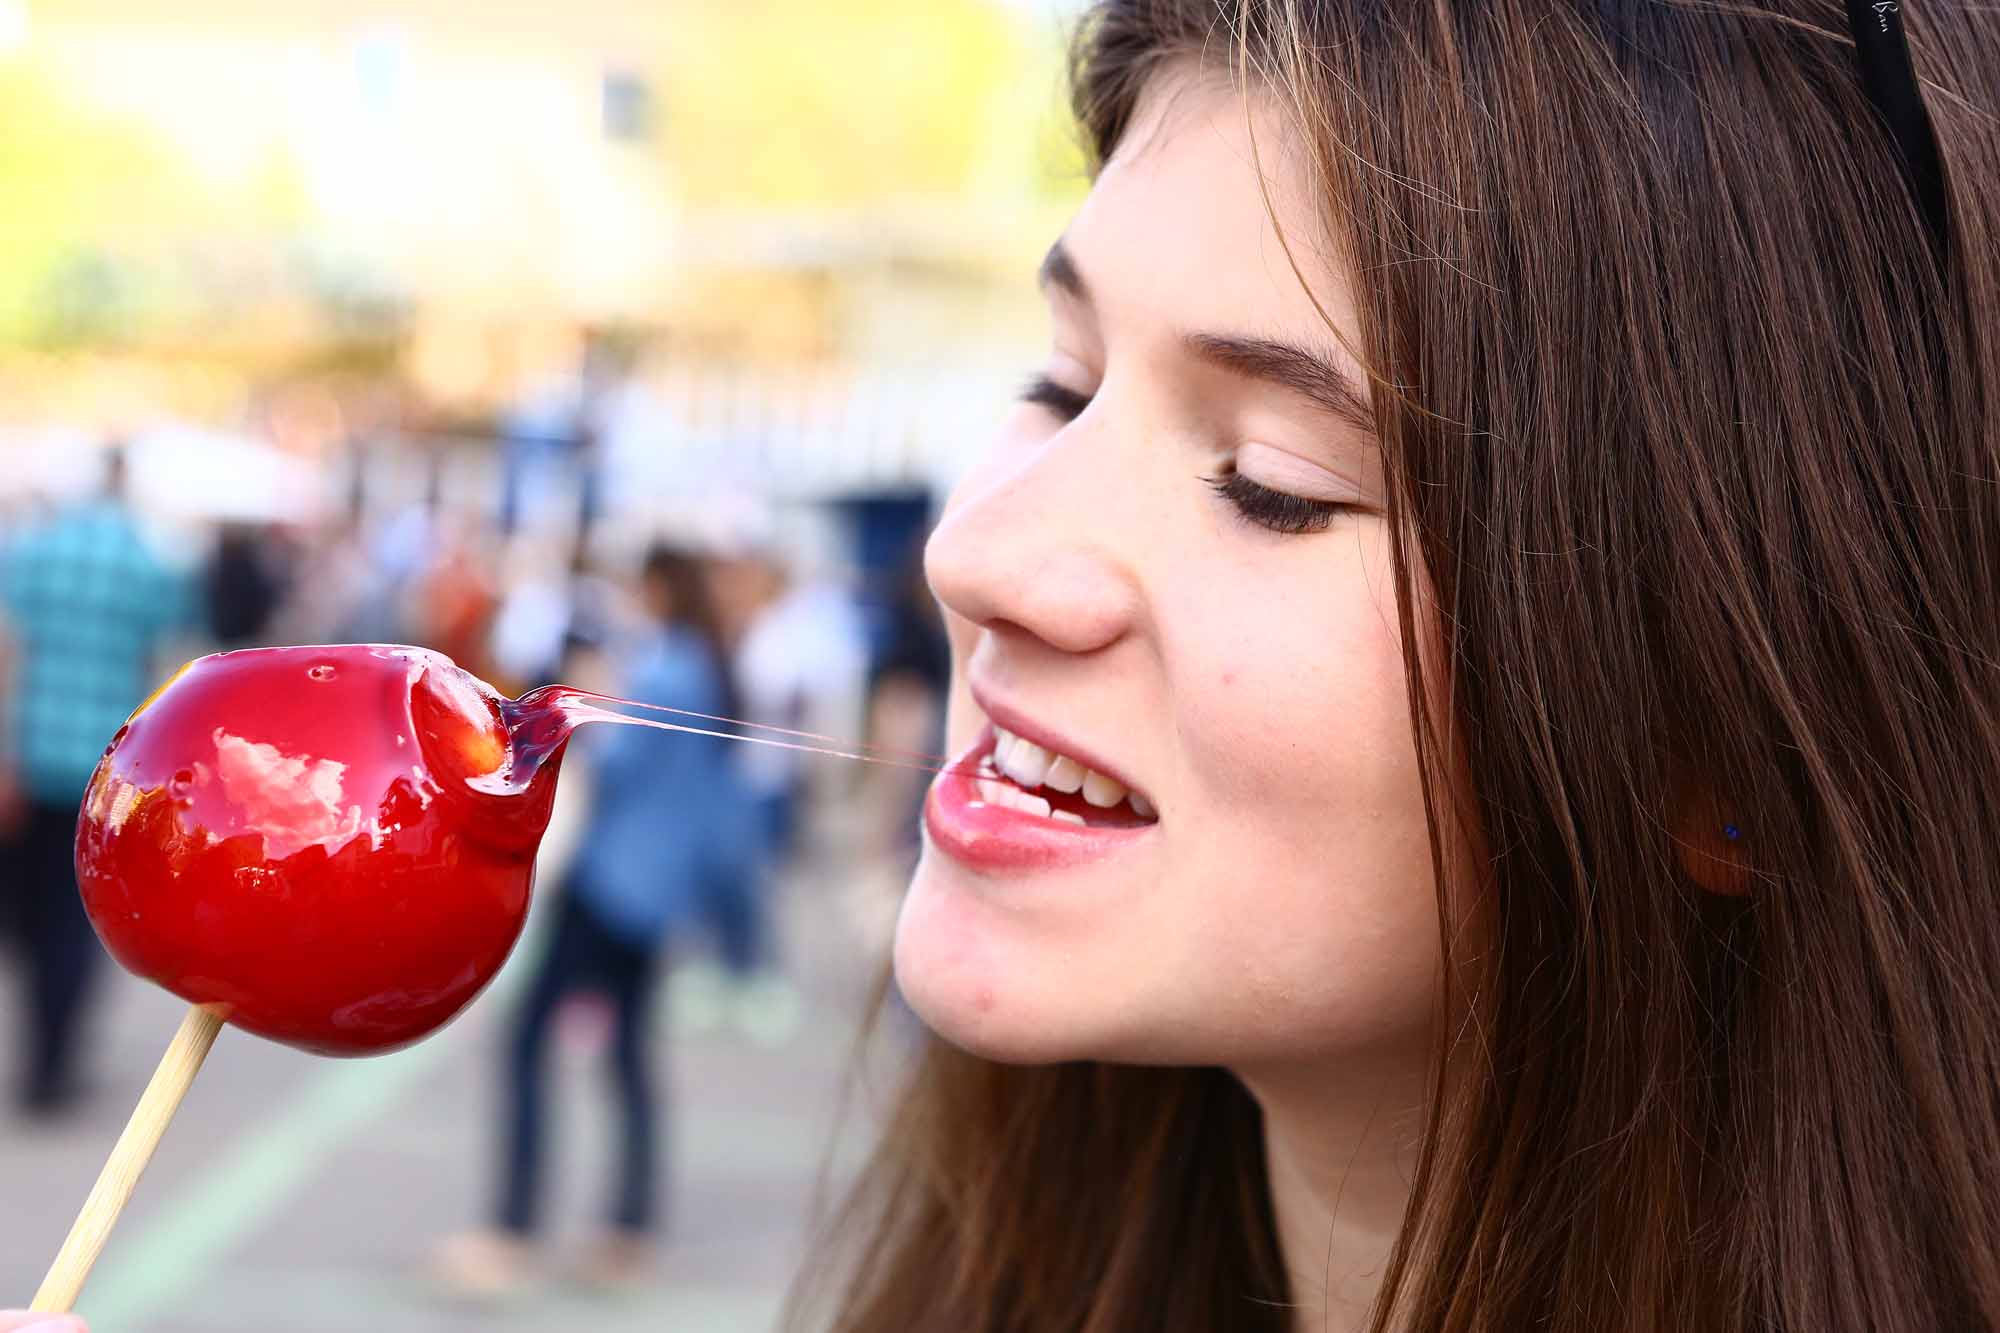 Teen girl biting into a caramel apple - Smart Pediatric Dentistry, Utah